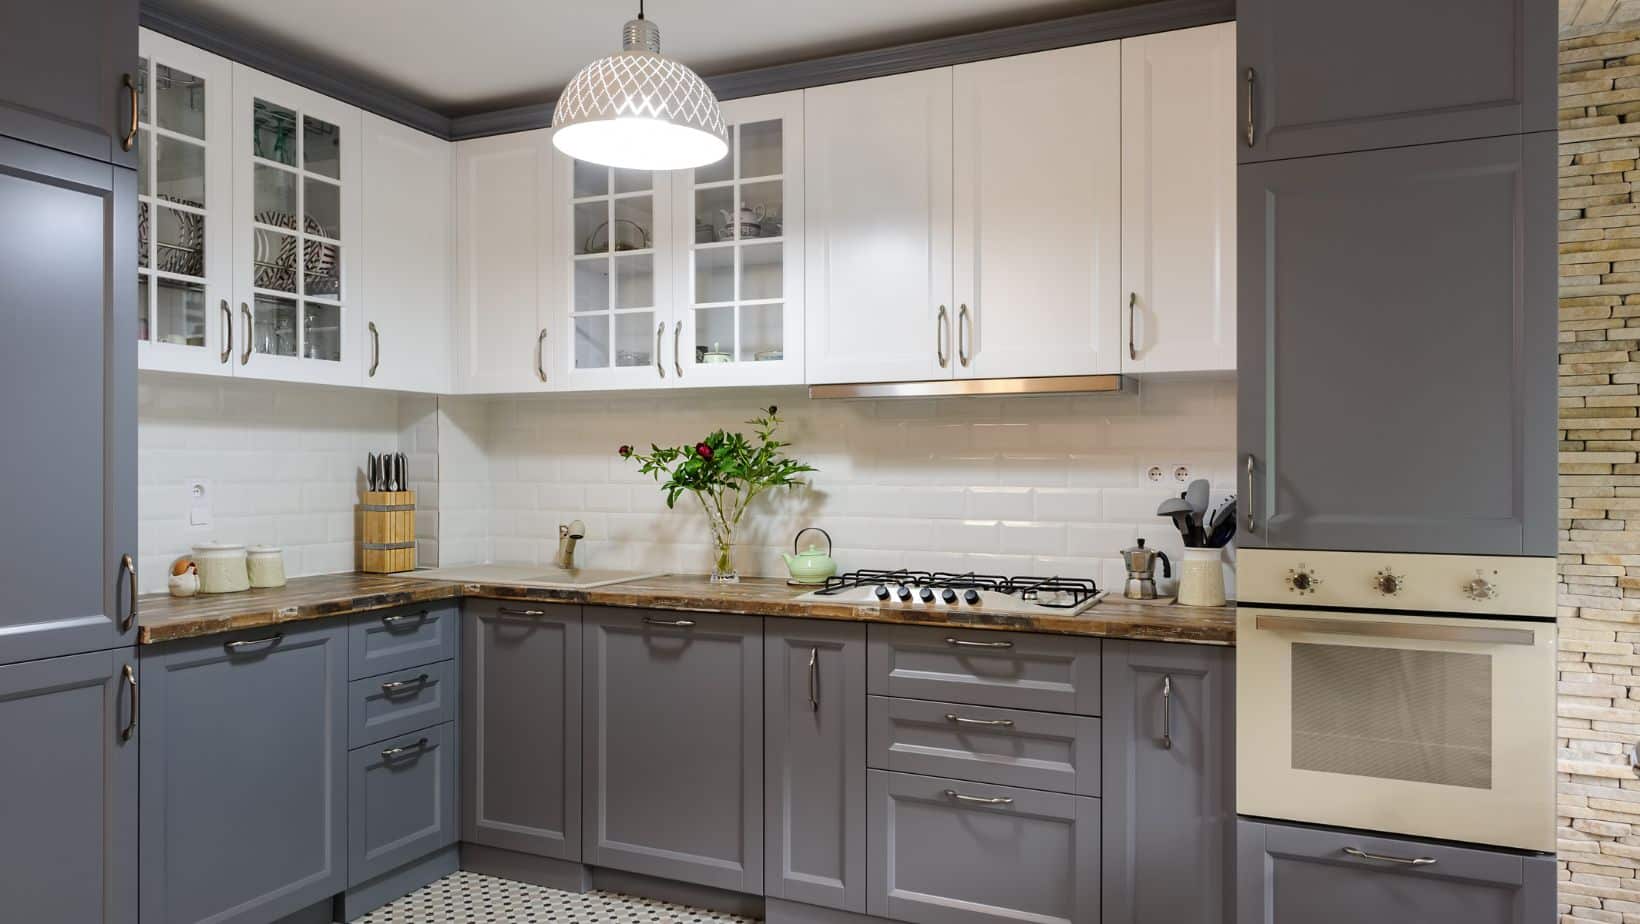 Dark Grey kitchen cabinets with brown countertops